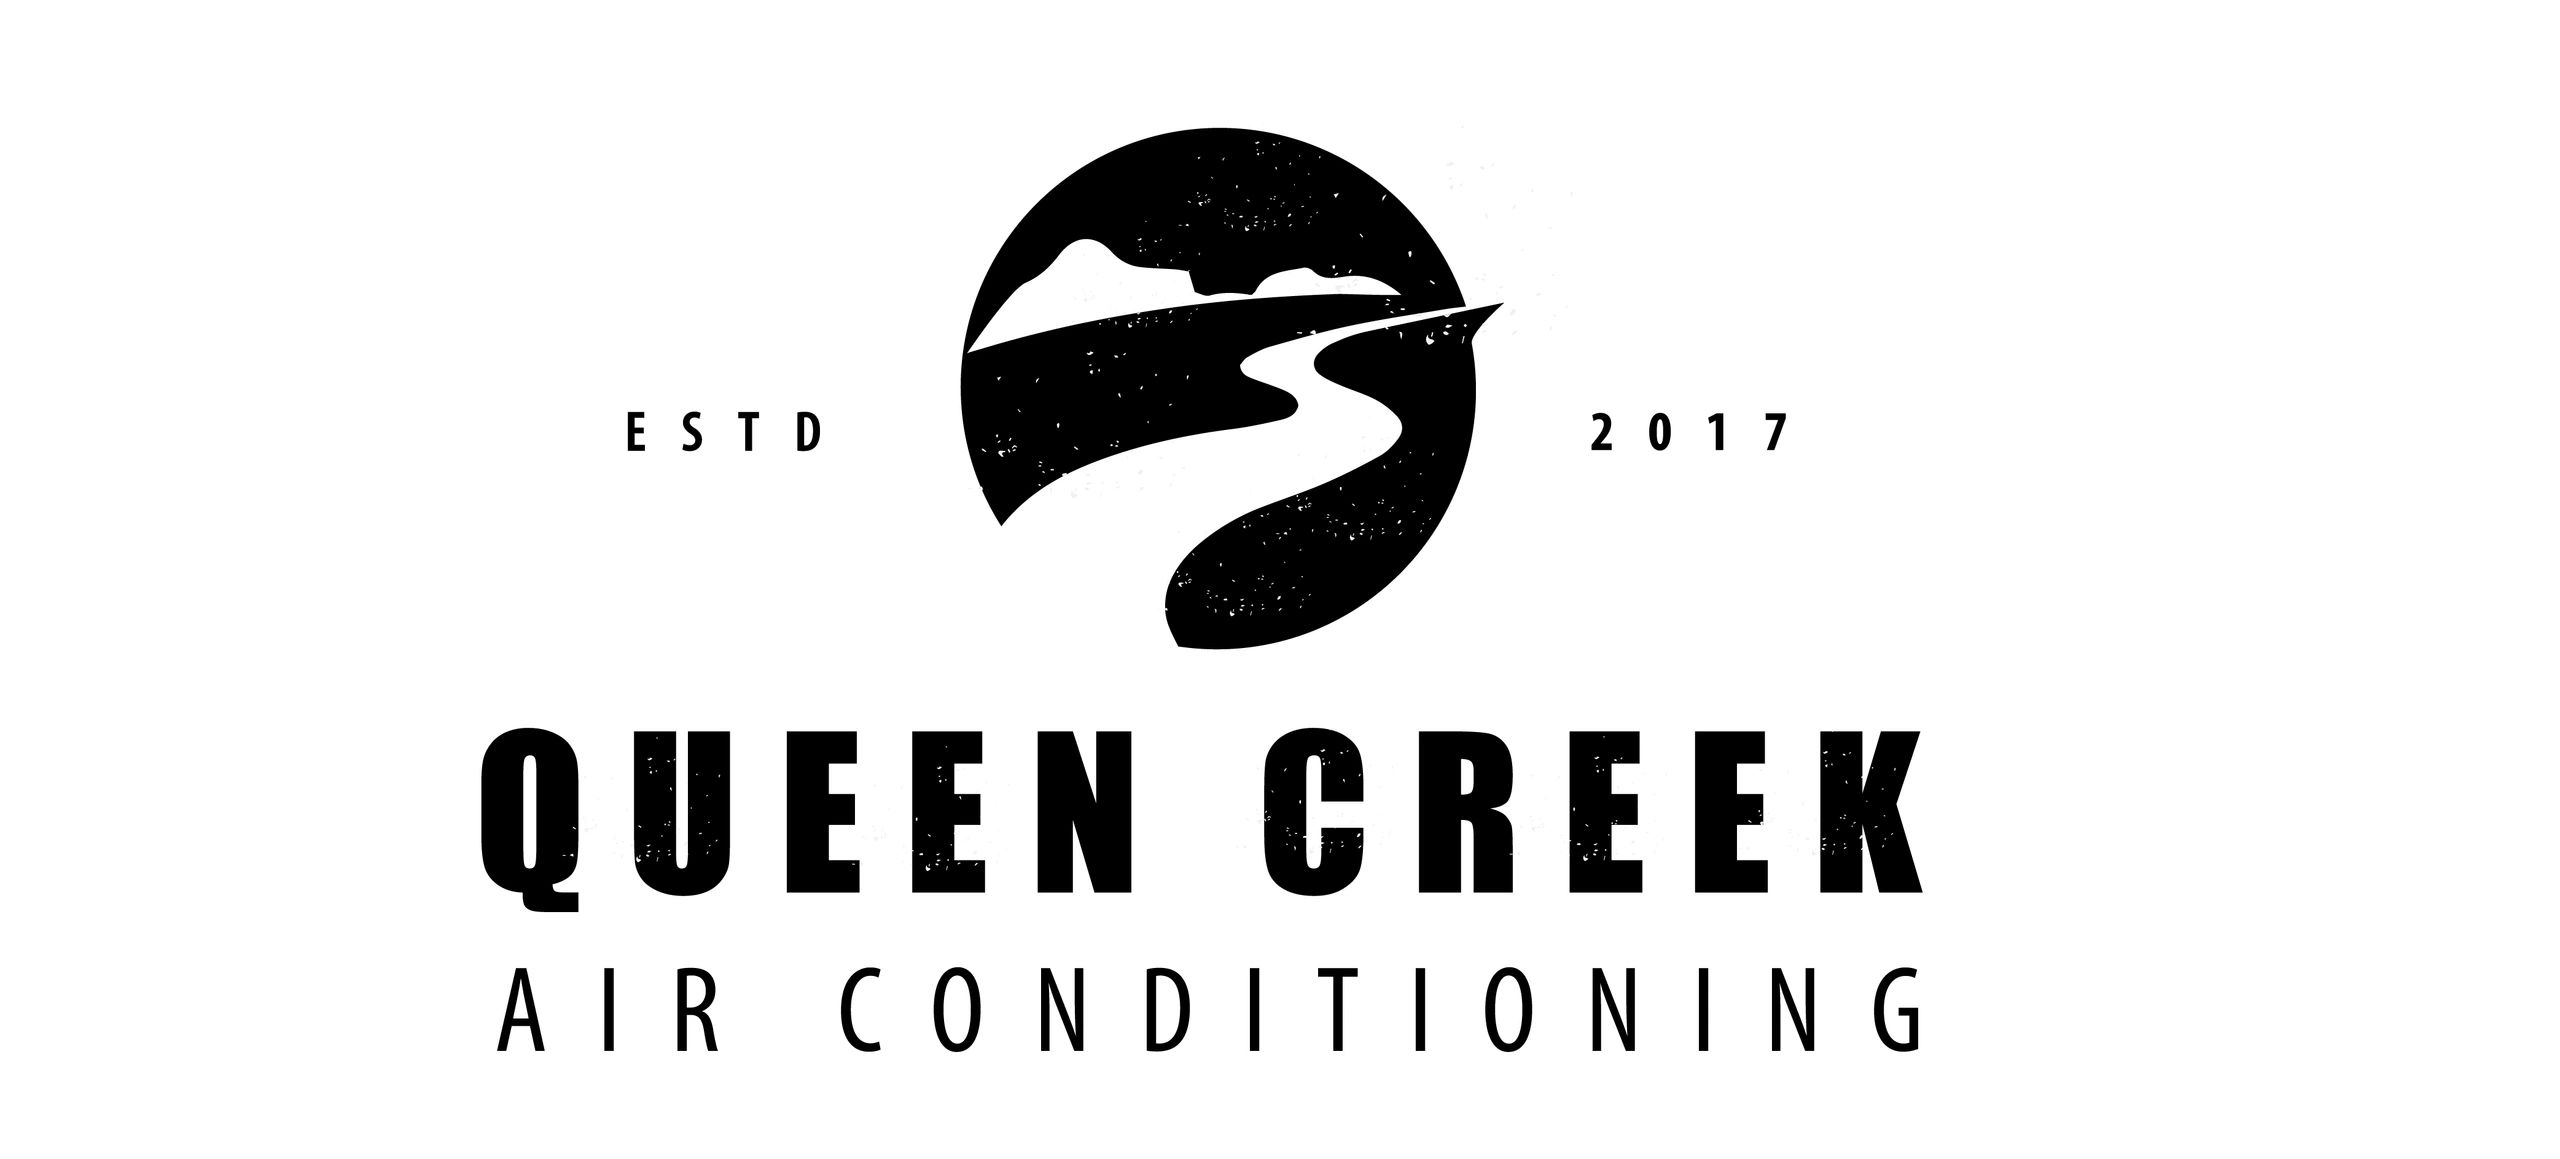 Queen Creek Air Conditioning, LOGO